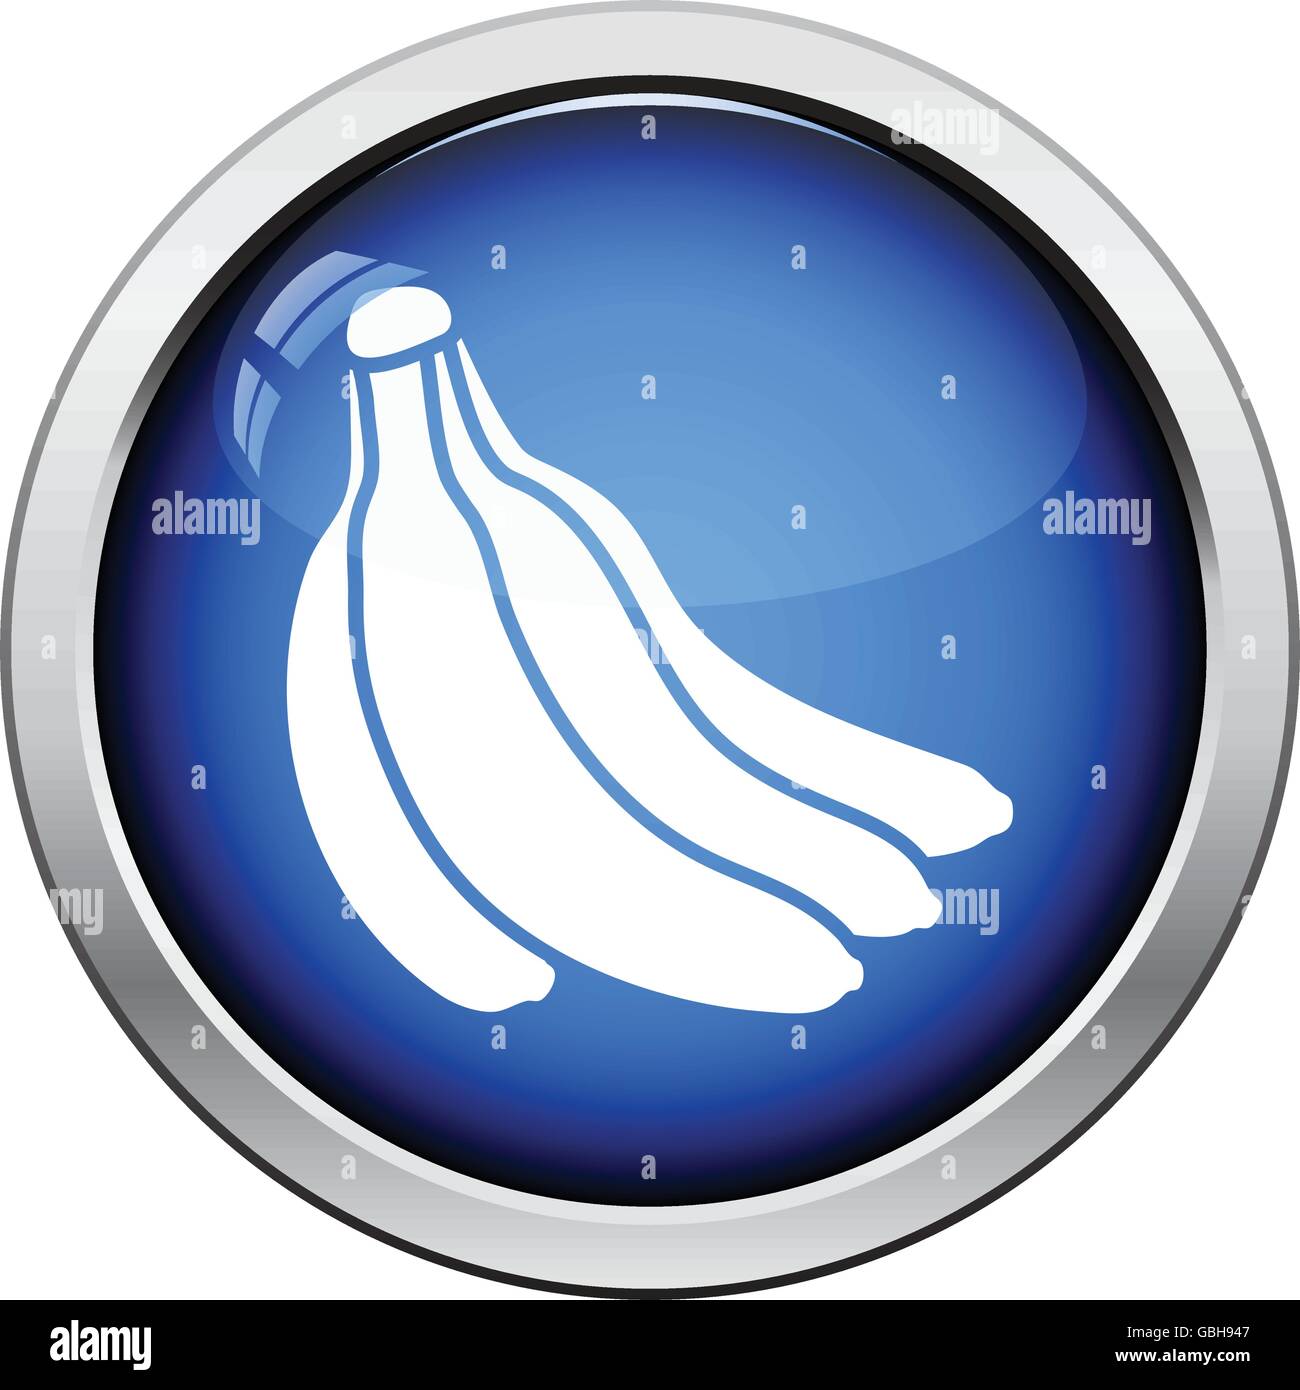 Icon of Banana. Glossy button design. Vector illustration. Stock Vector